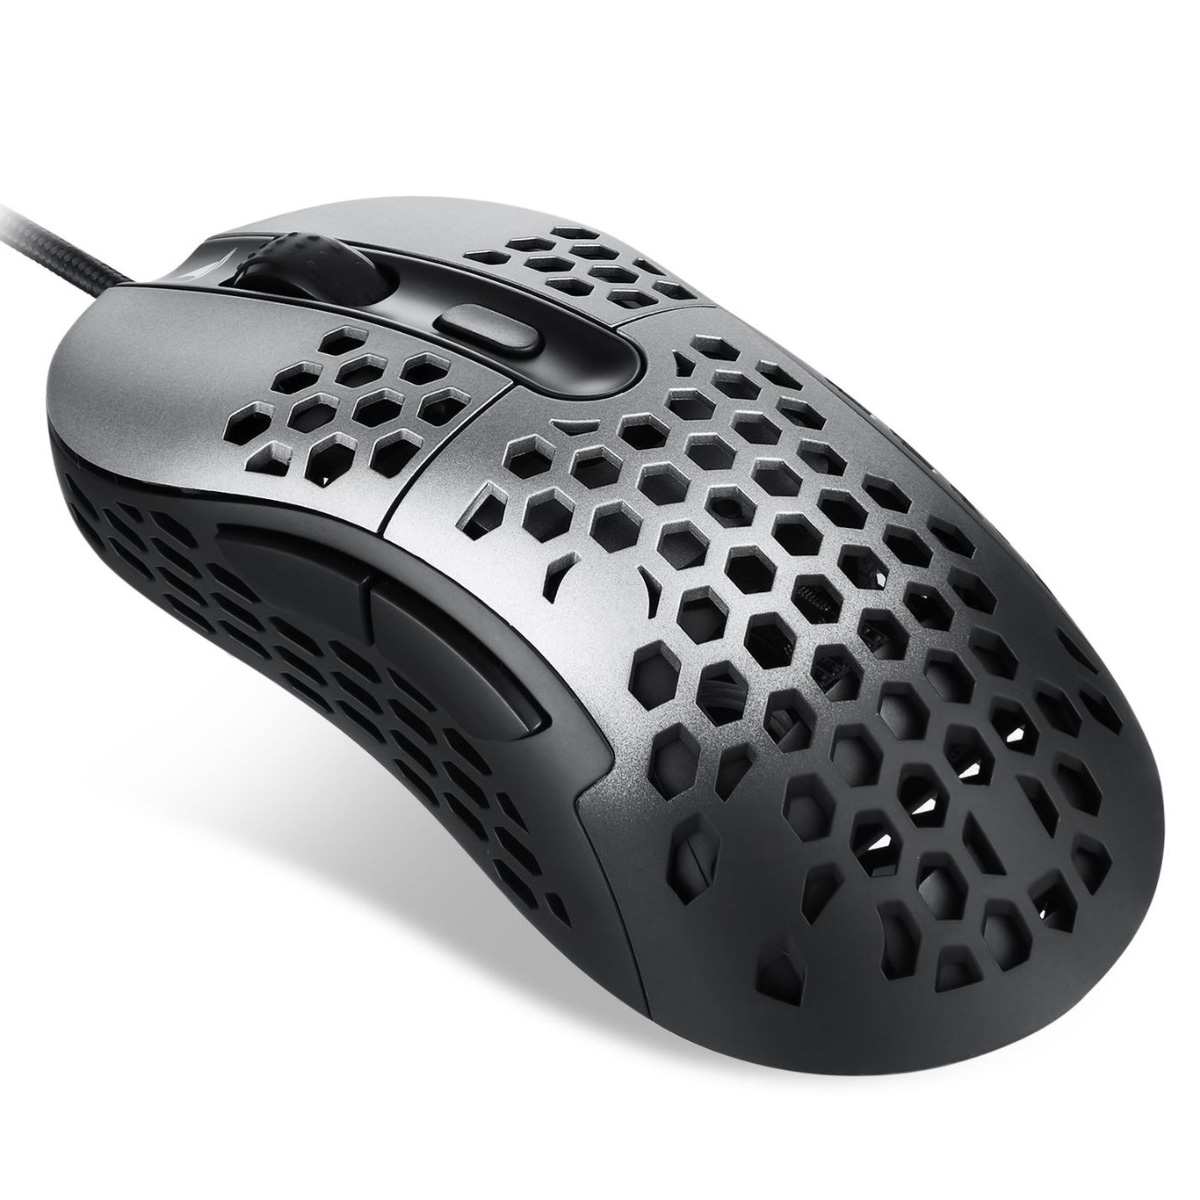 Mouse Gamer Motospeed Darmoshark N1 Essential - 6400dpi - RGB - 6 Botões - FMSMS0086PTO